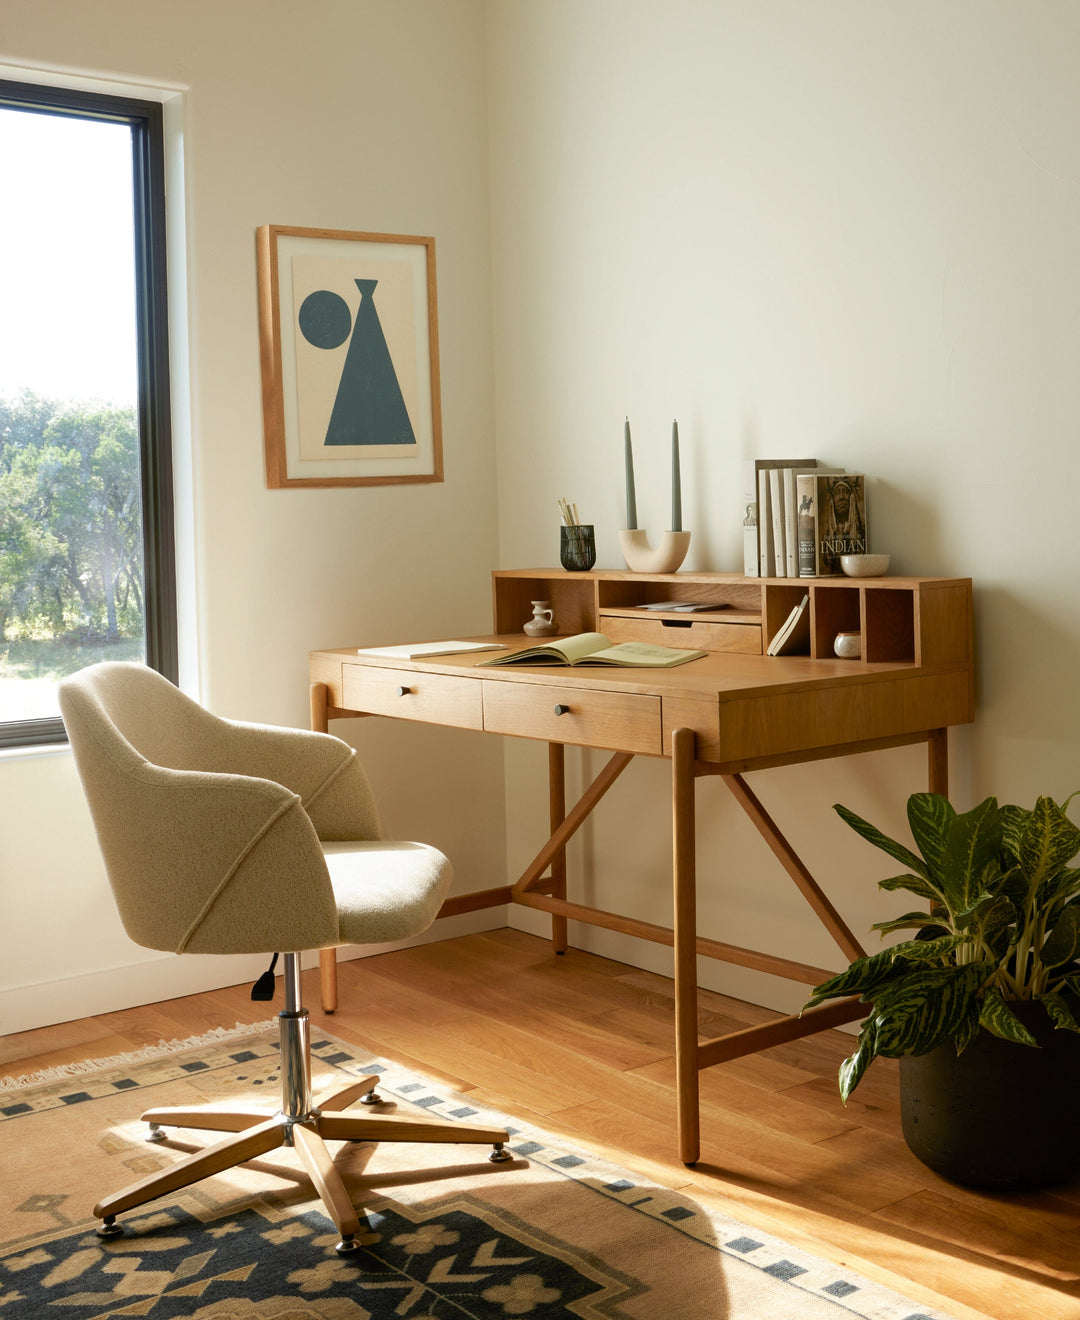 Vesuvi Desk Chair - Fedora Oatmeal